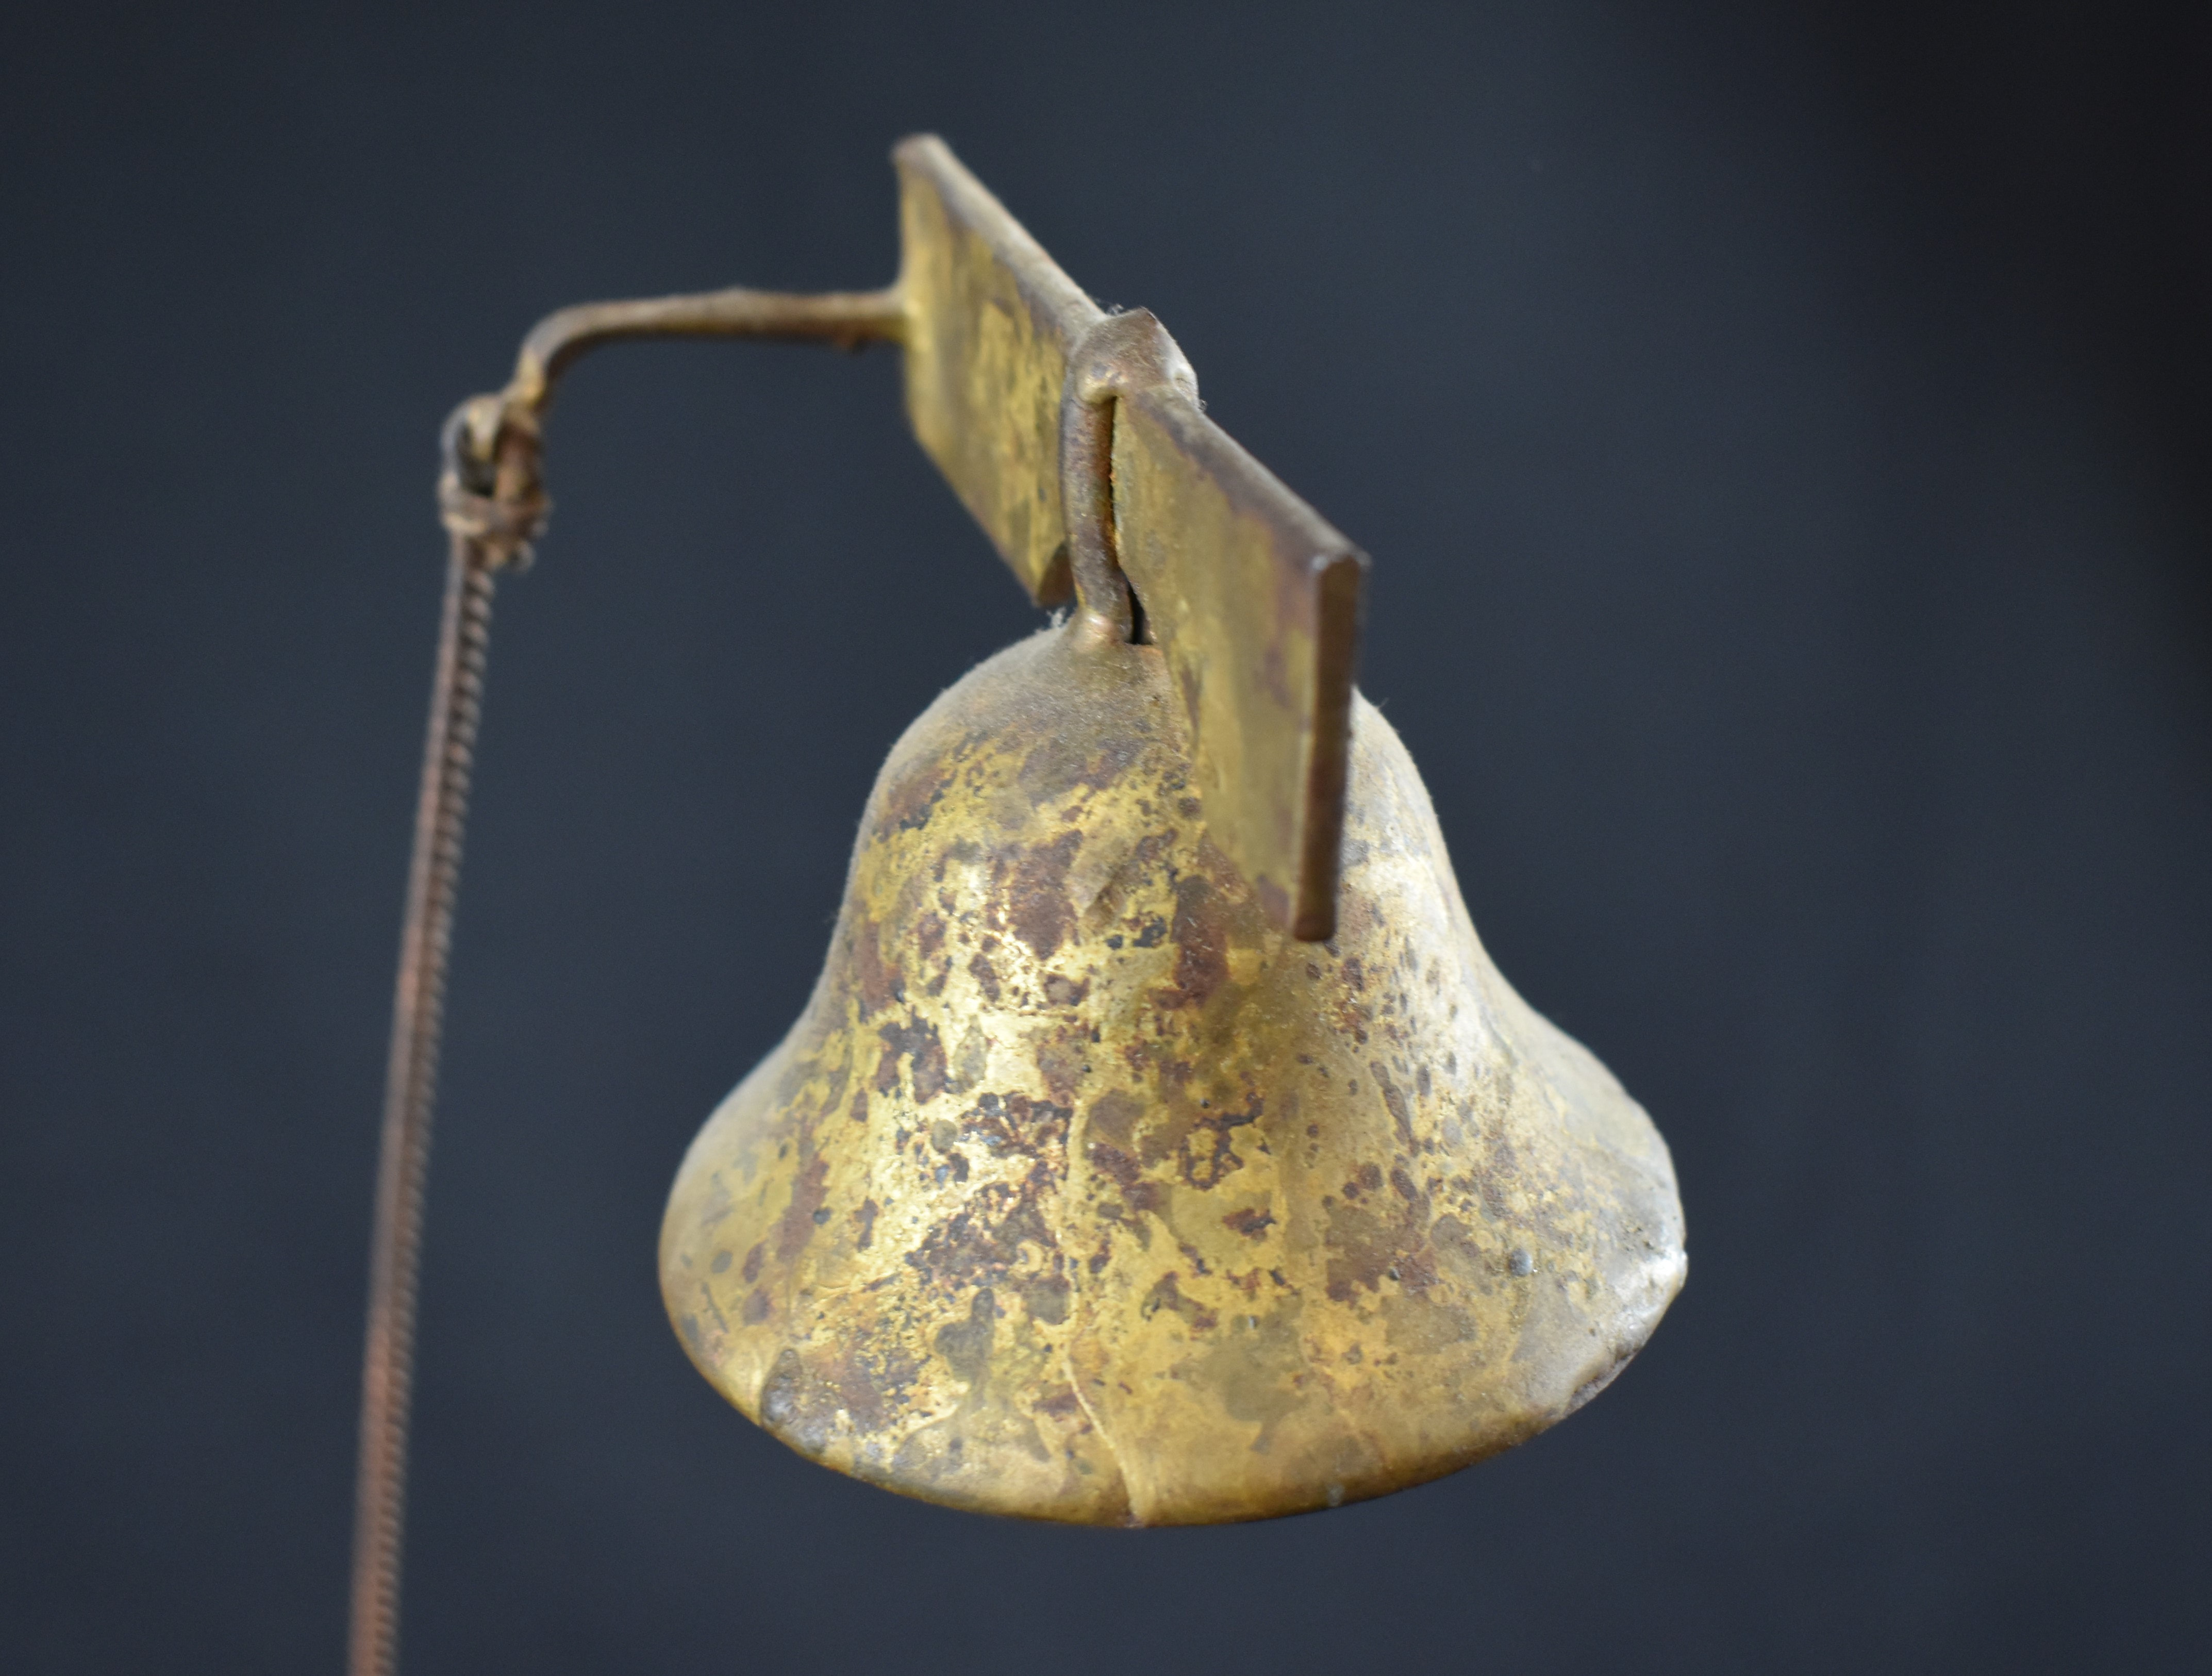 Ring My Bell by Joshua Bird on Dribbble